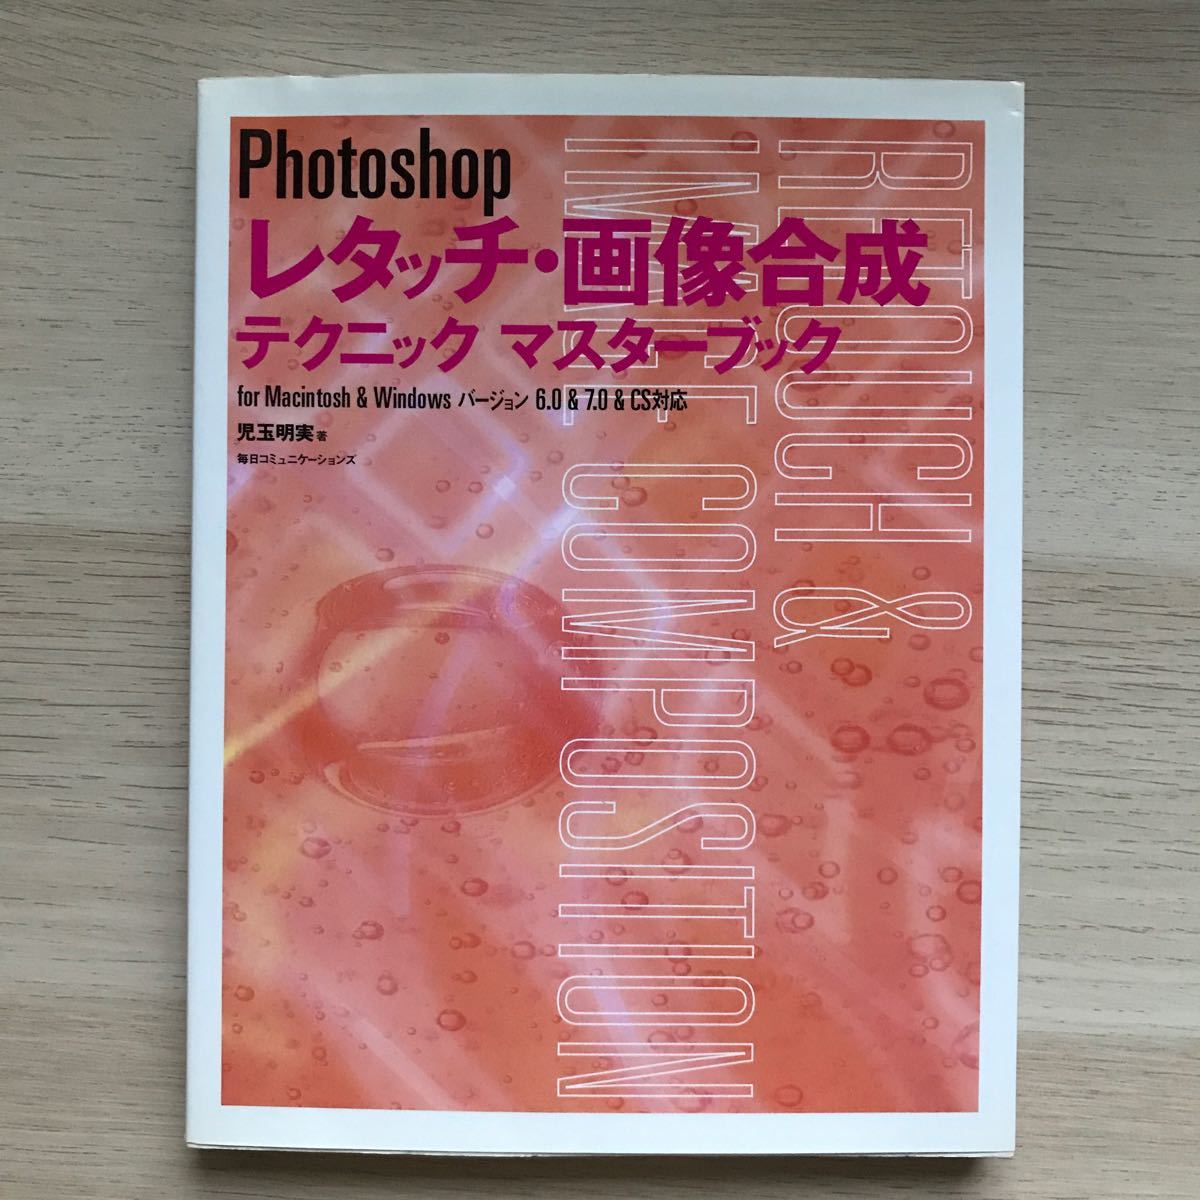 Photoshop レタッチ・画像合成テクニックマスターブック for Mac…